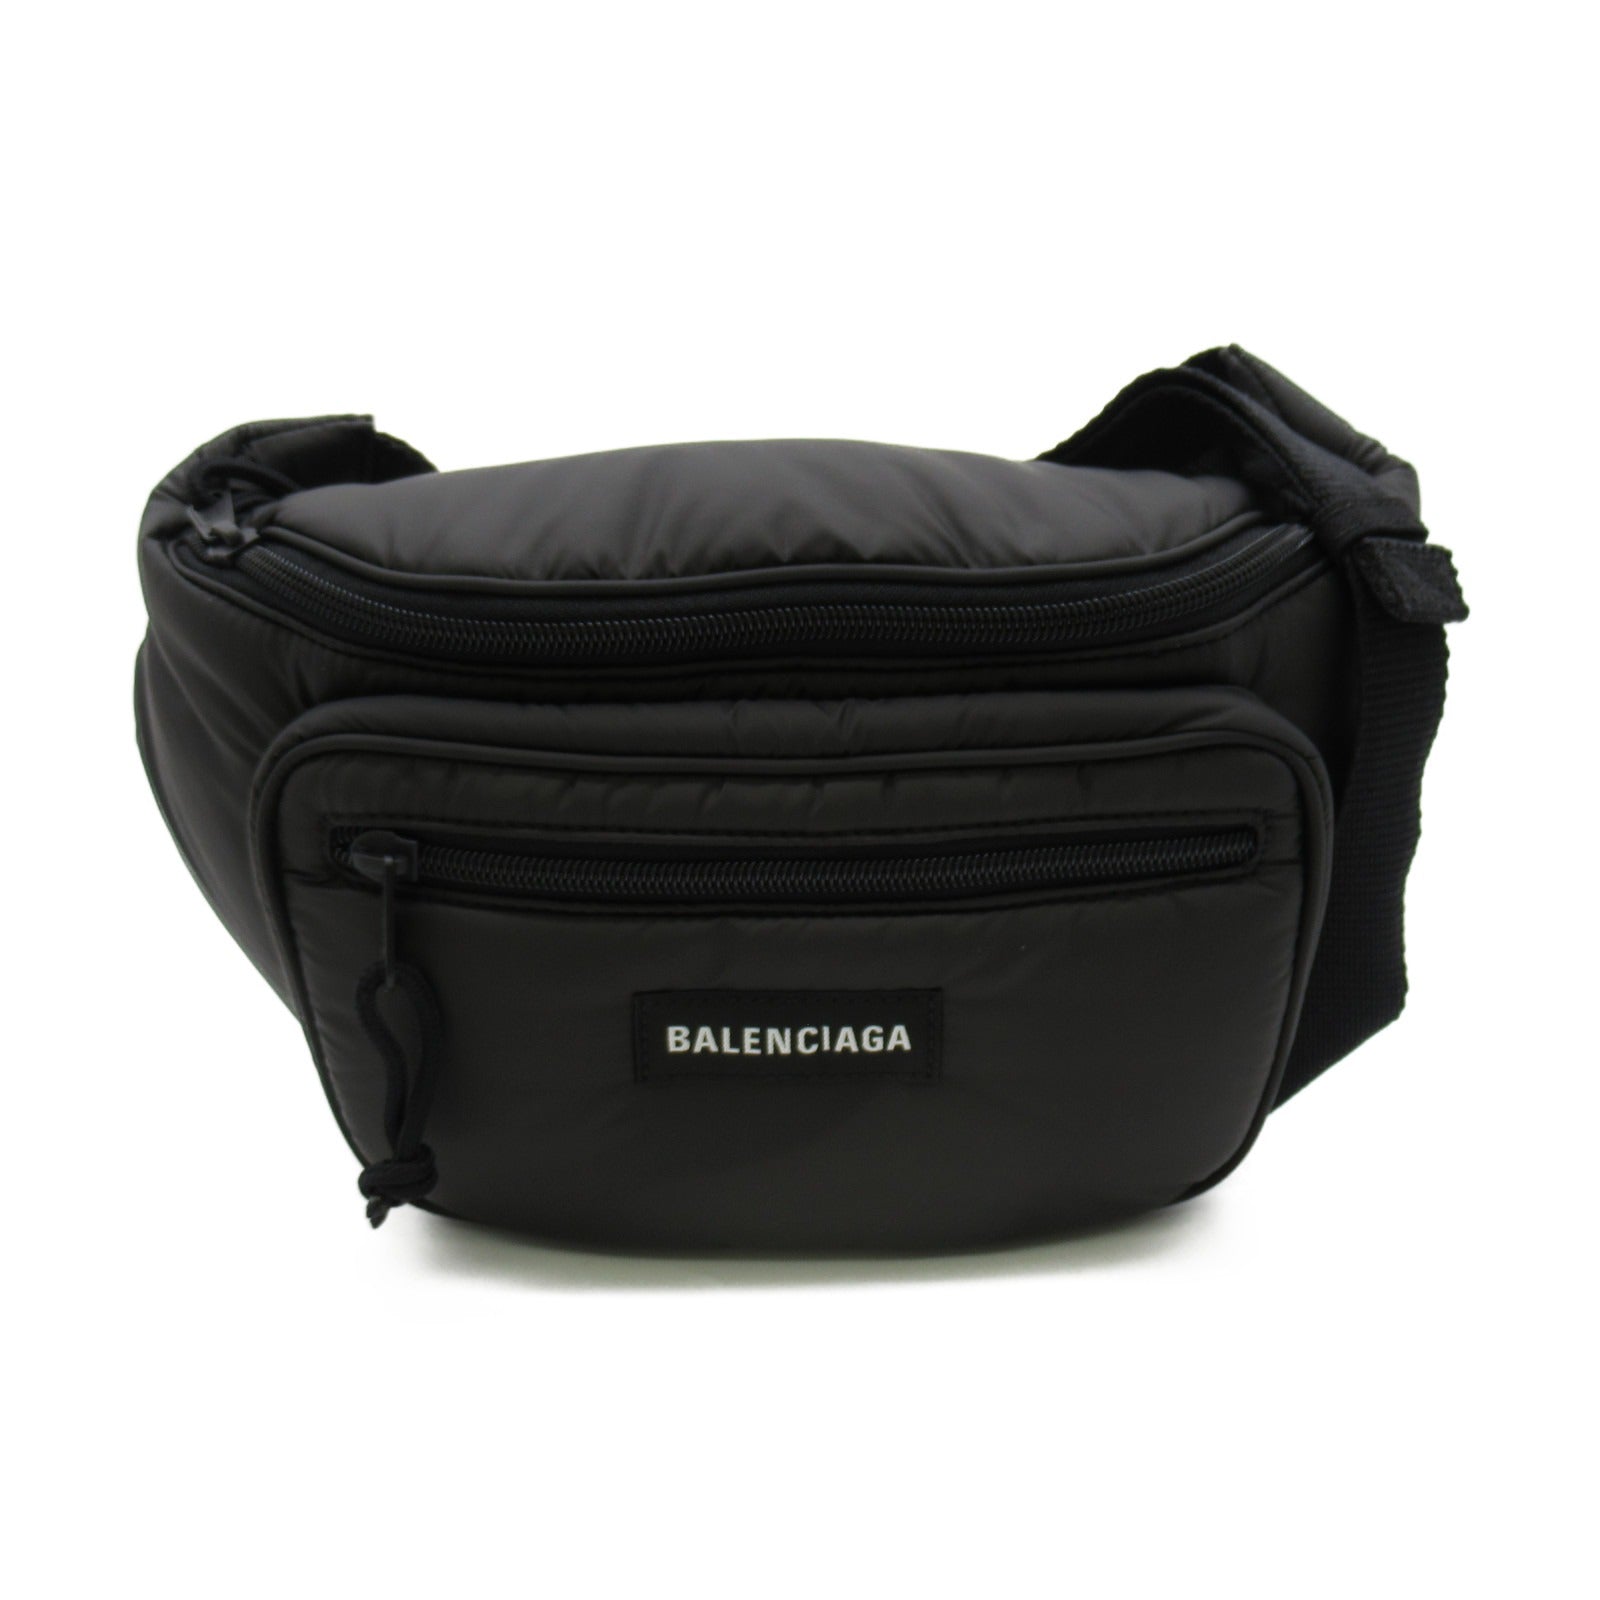 Balancega BALENCIAGA Explorer Belt Bag Waist Bag Polyurethane  Black  4823892AAMA1000